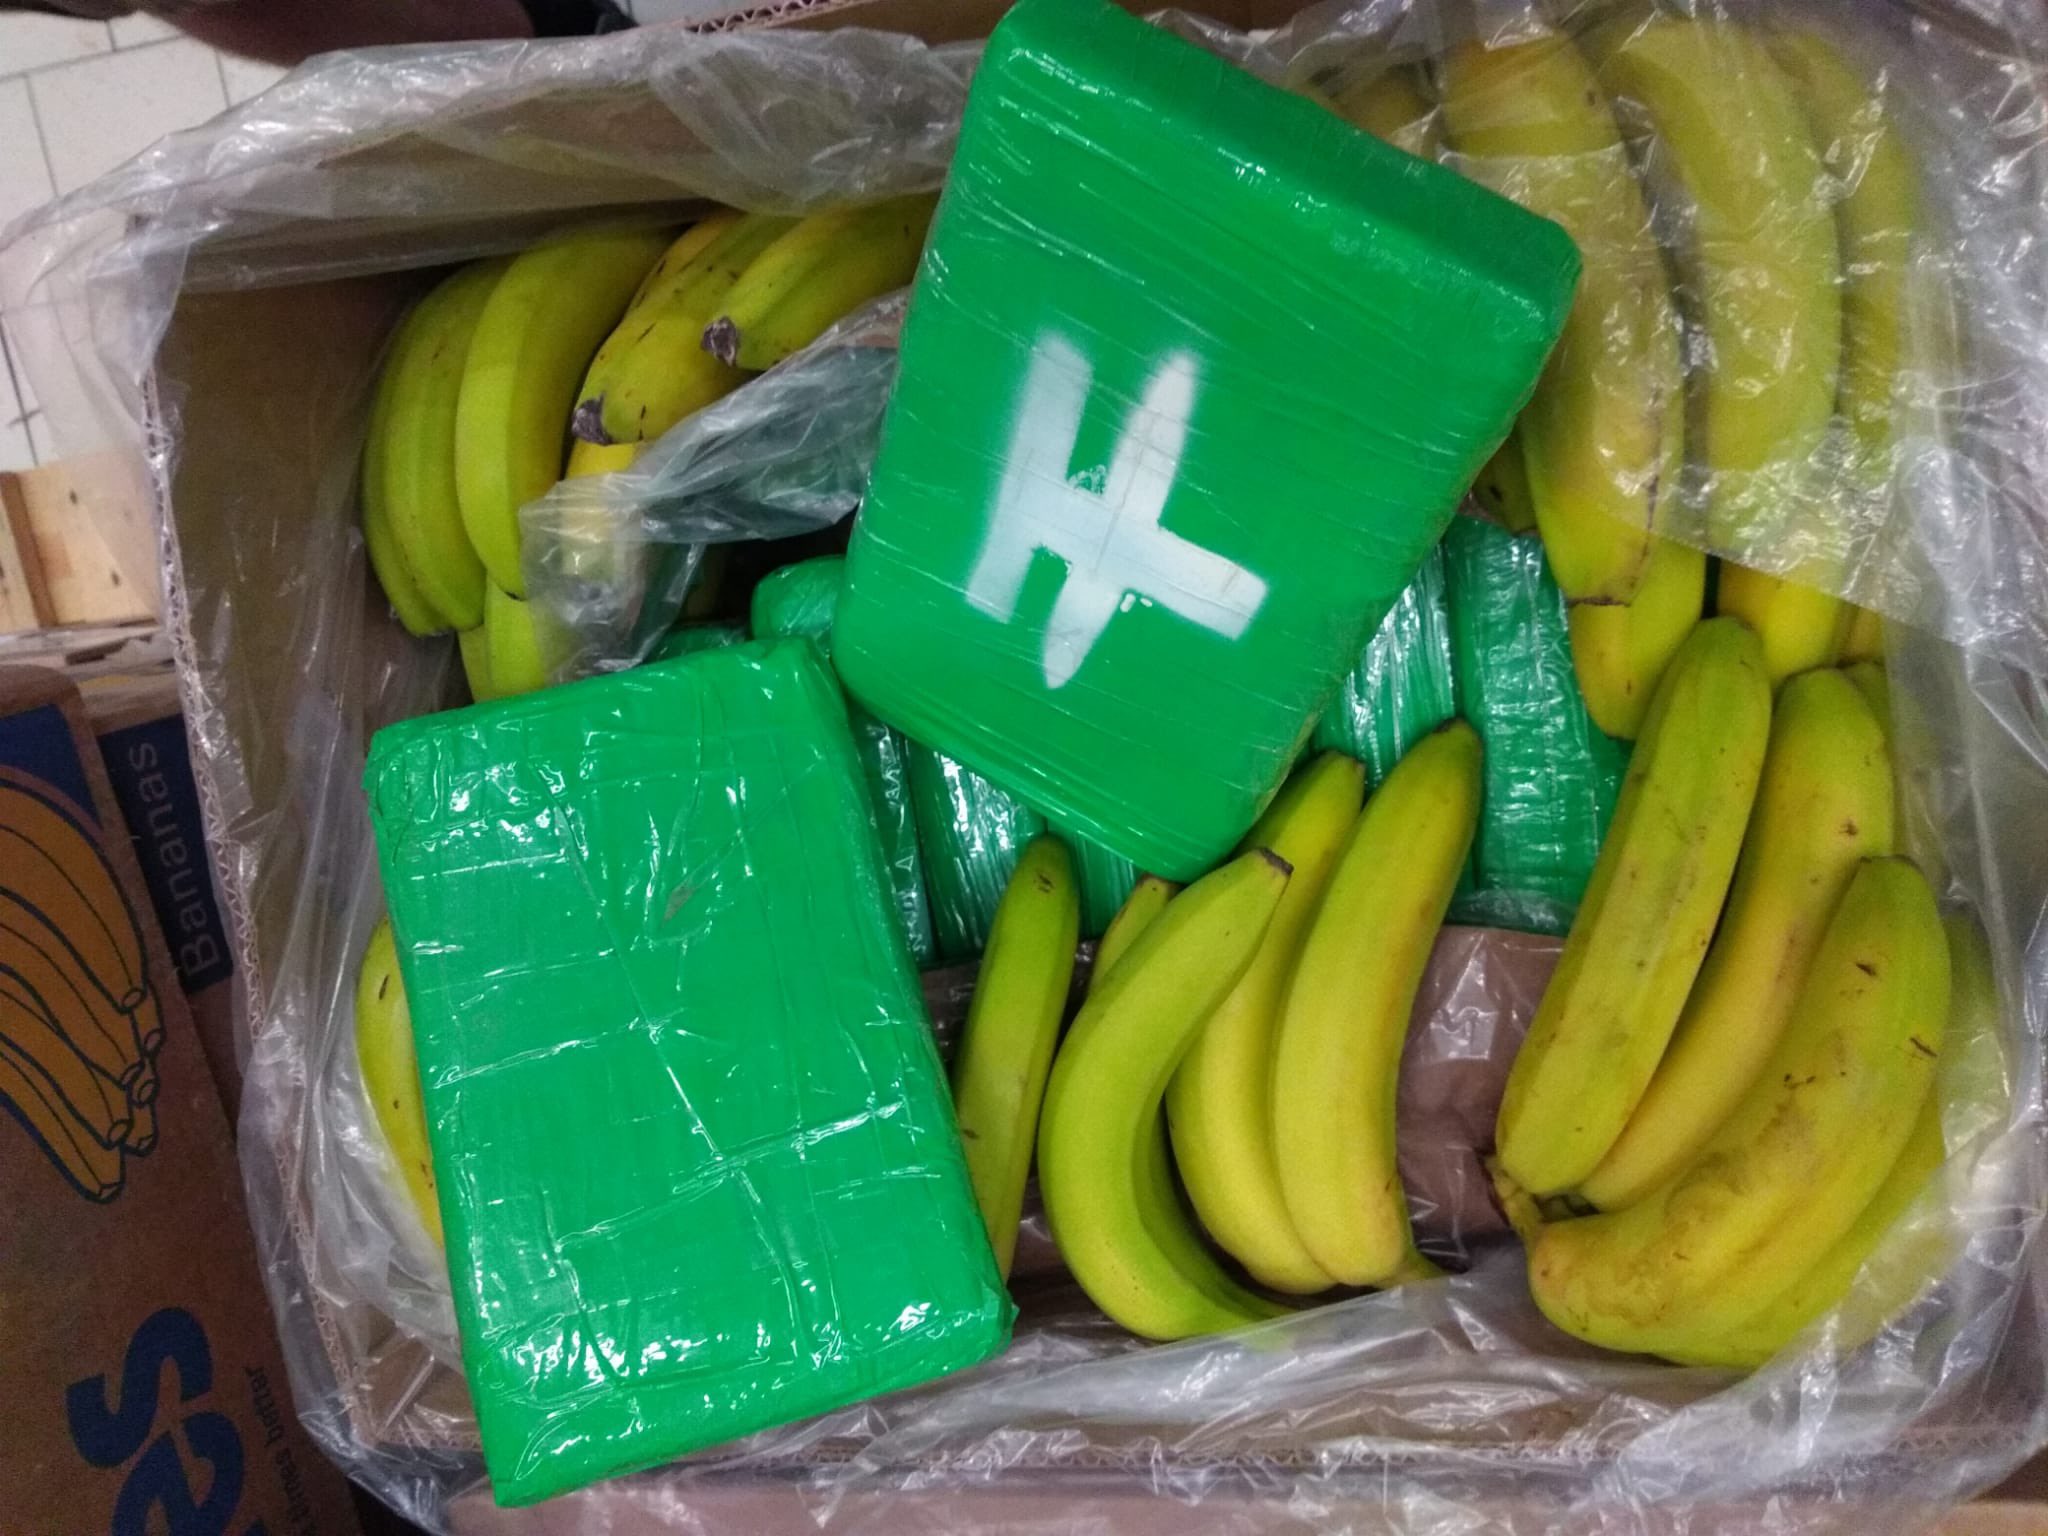 V bananah tihotapili 3,5 tone kokaina namenjenega v Evropo